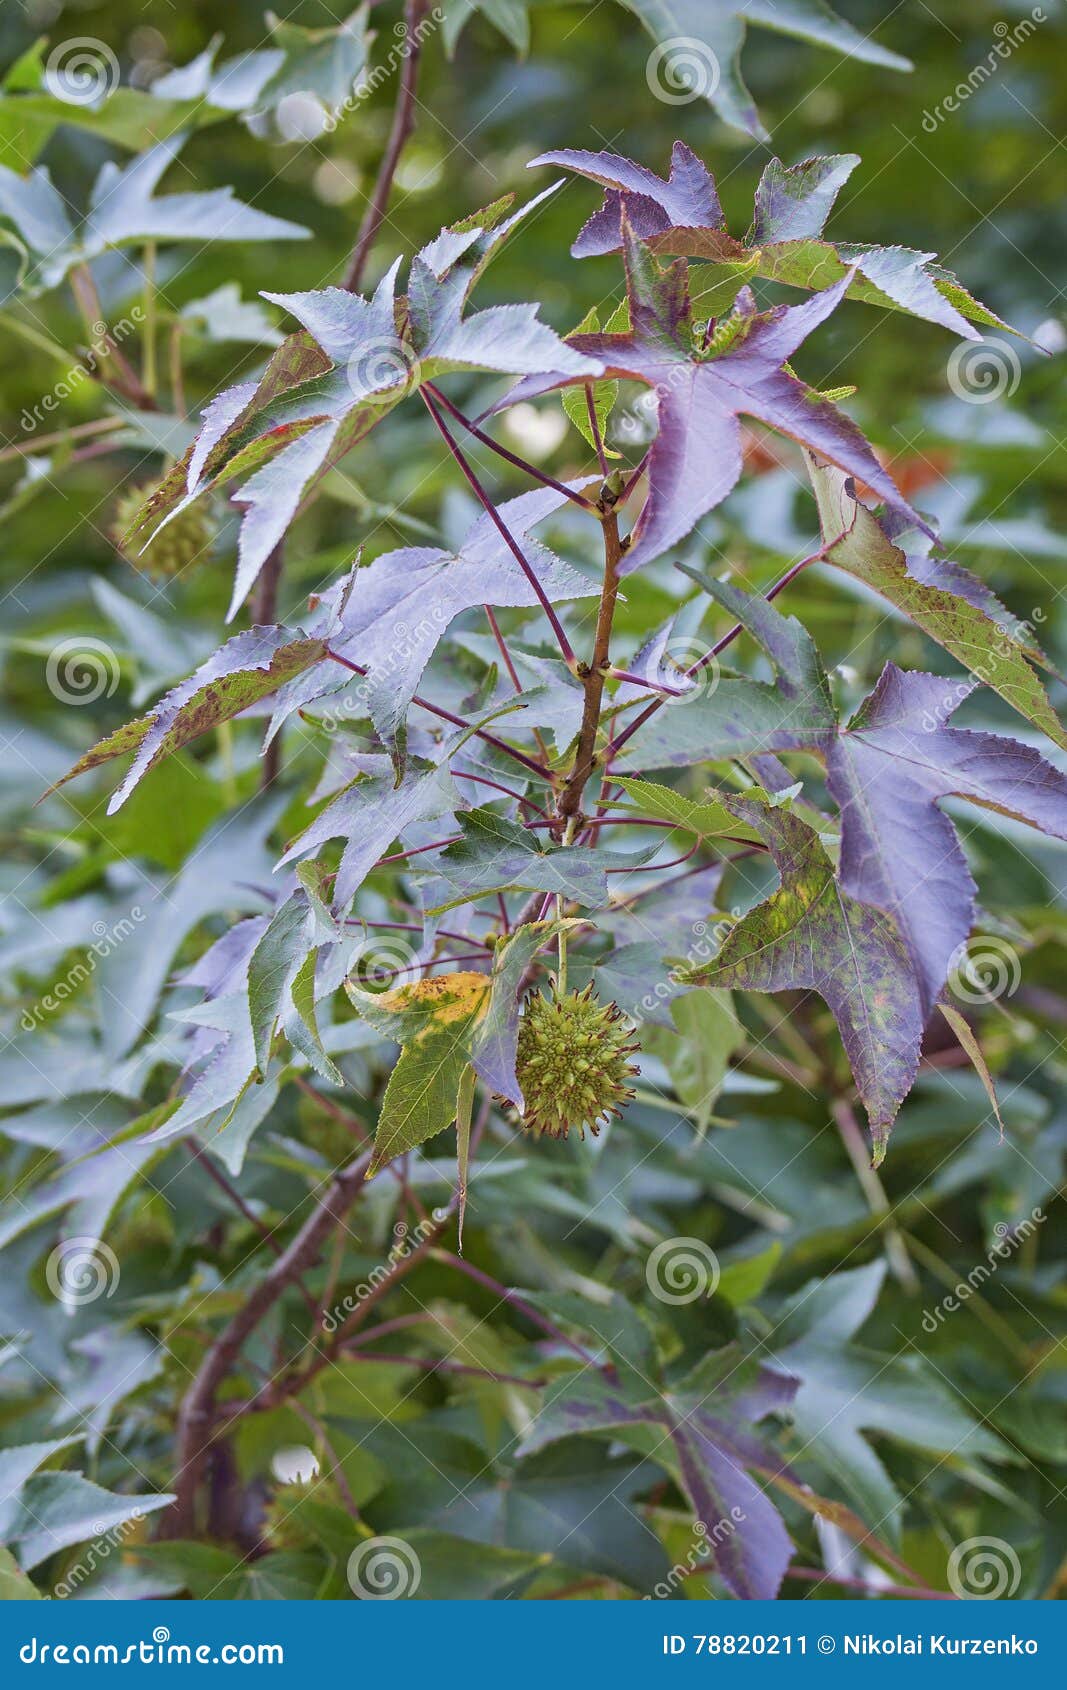 american sweetgum leaves and fruit